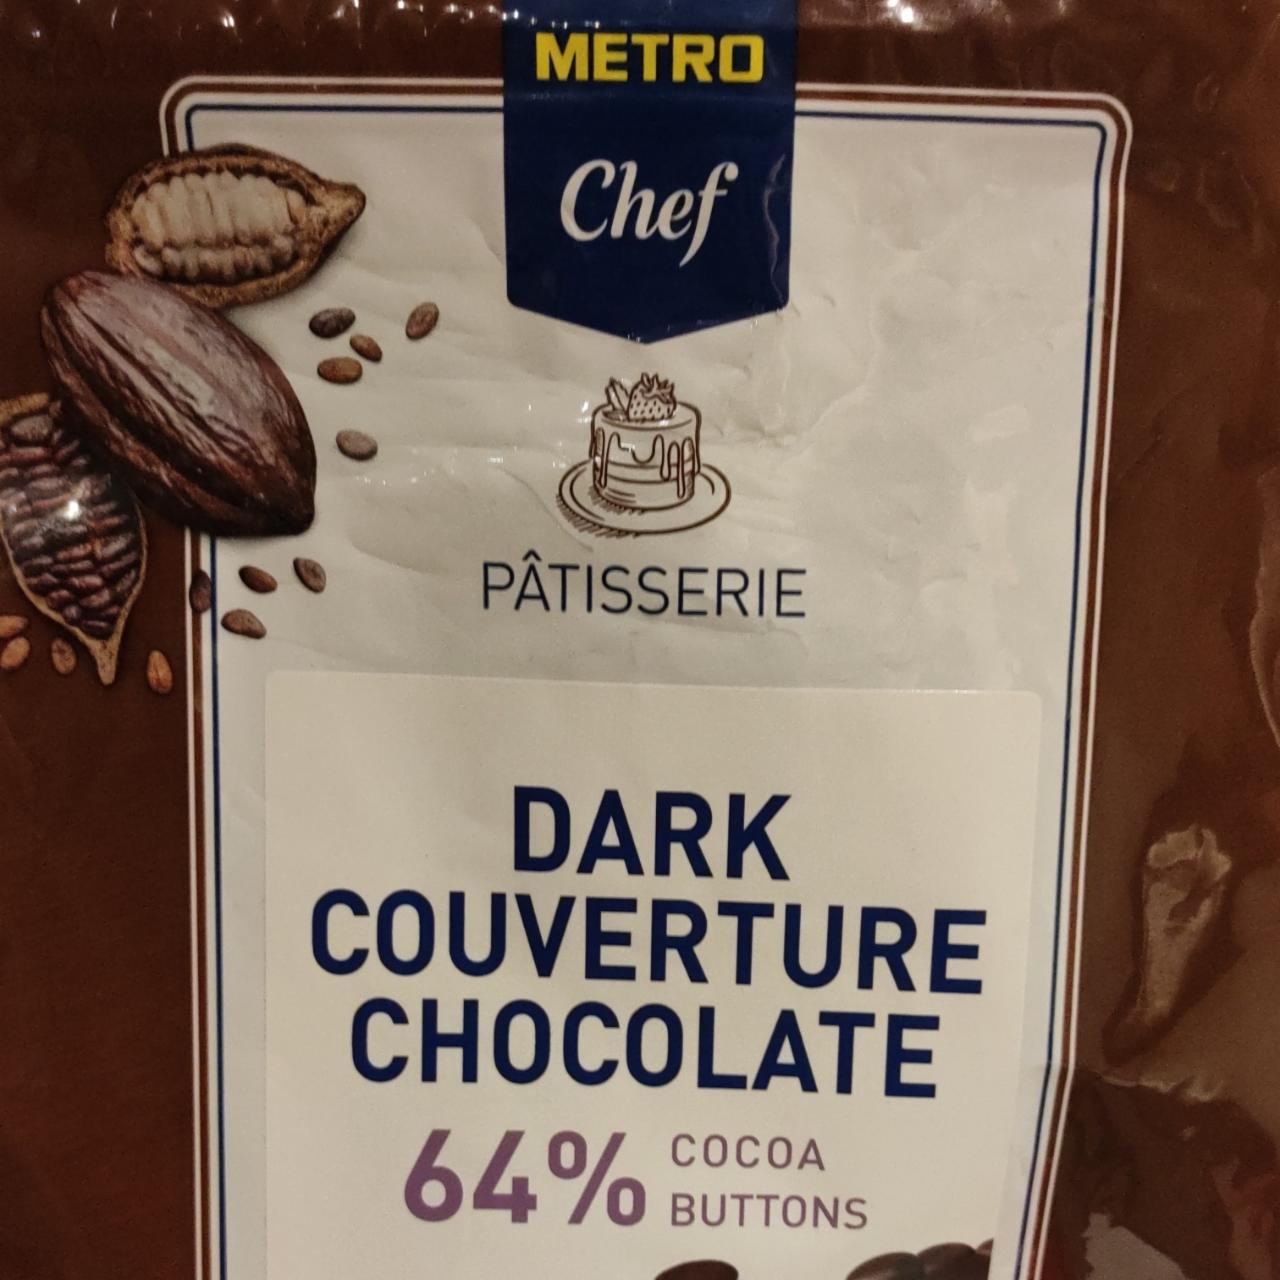 Fotografie - Dark couverture chocolate 64% cocoa buttons Metro Chef